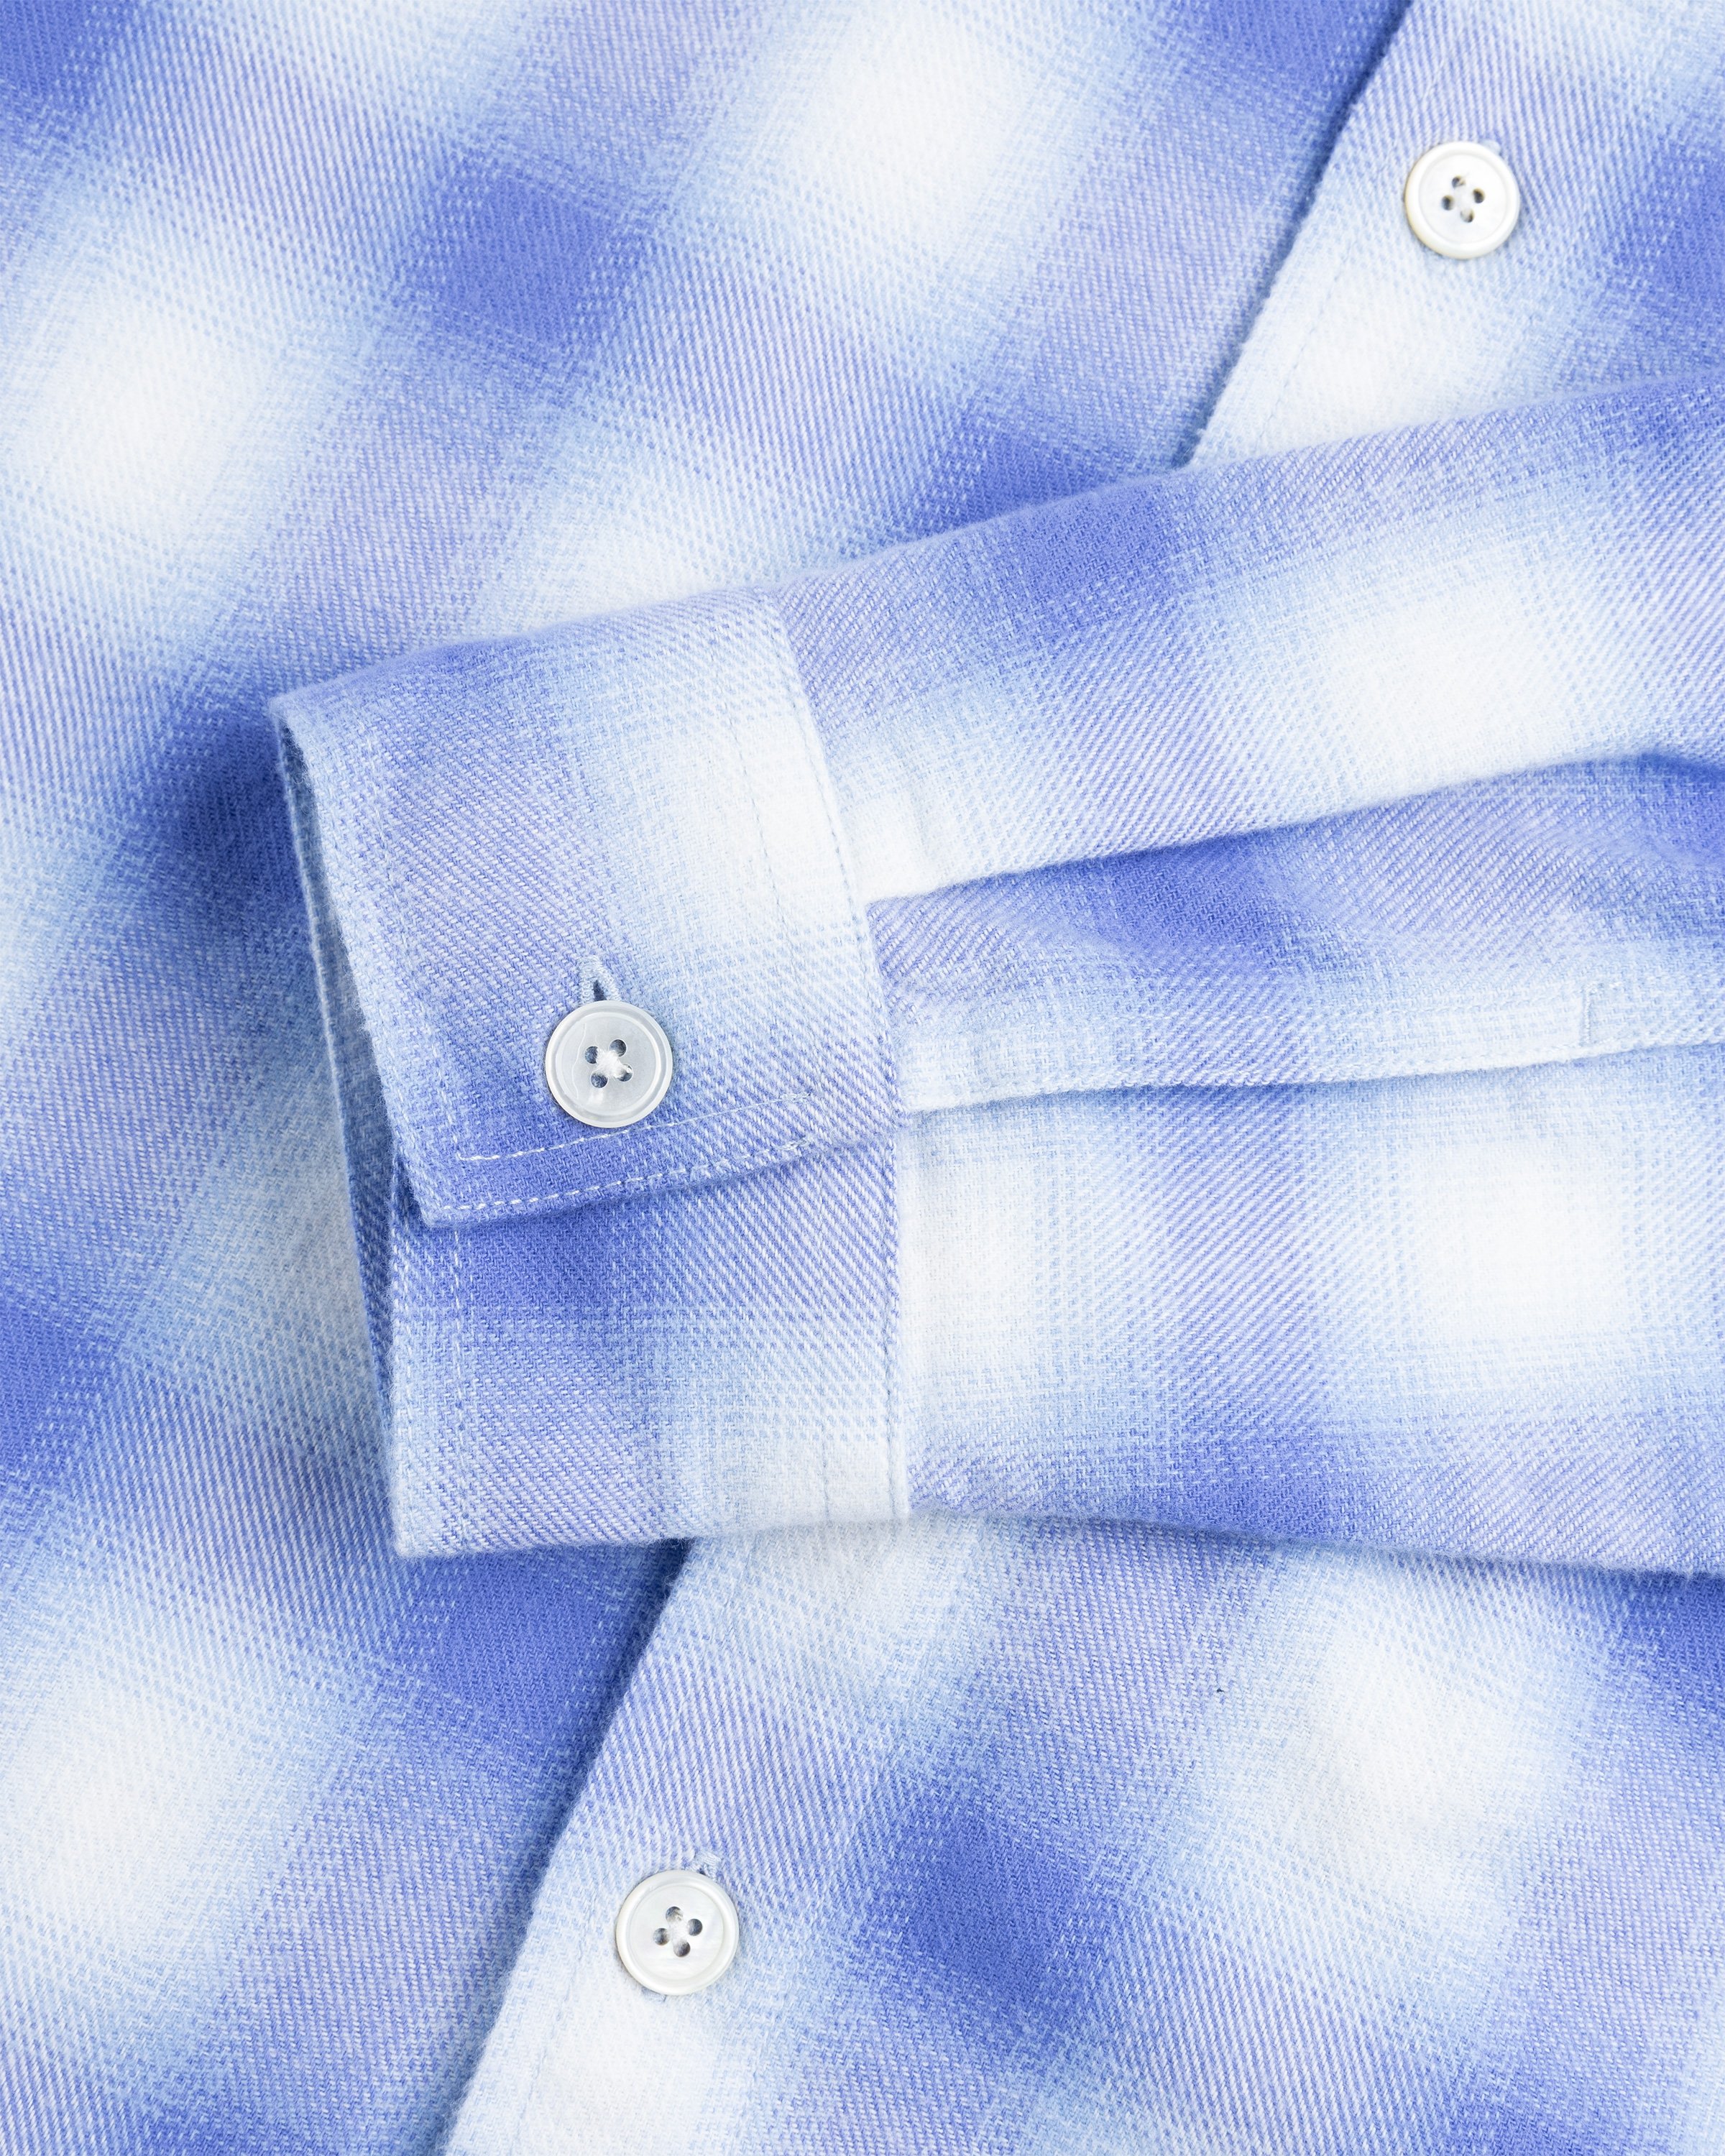 Tekla - Flannel Pyjamas Shirt Light Blue Plaid - Clothing - Blue - Image 6